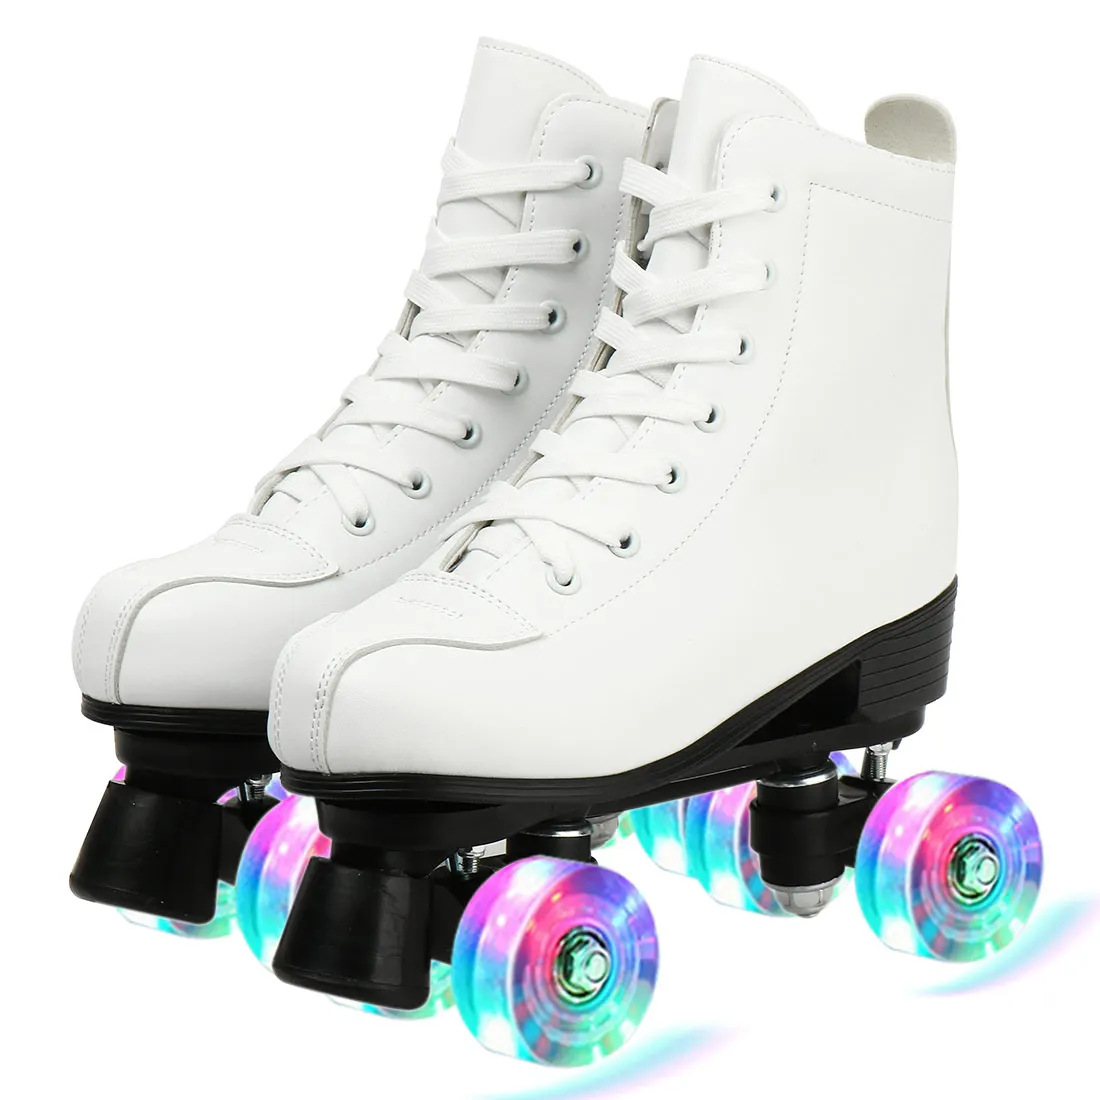 PU Leather Roller Skates Skating Shoes Sliding Inline Quad Skates Sneakers 4 Wheels Flash Wheel Free shipping